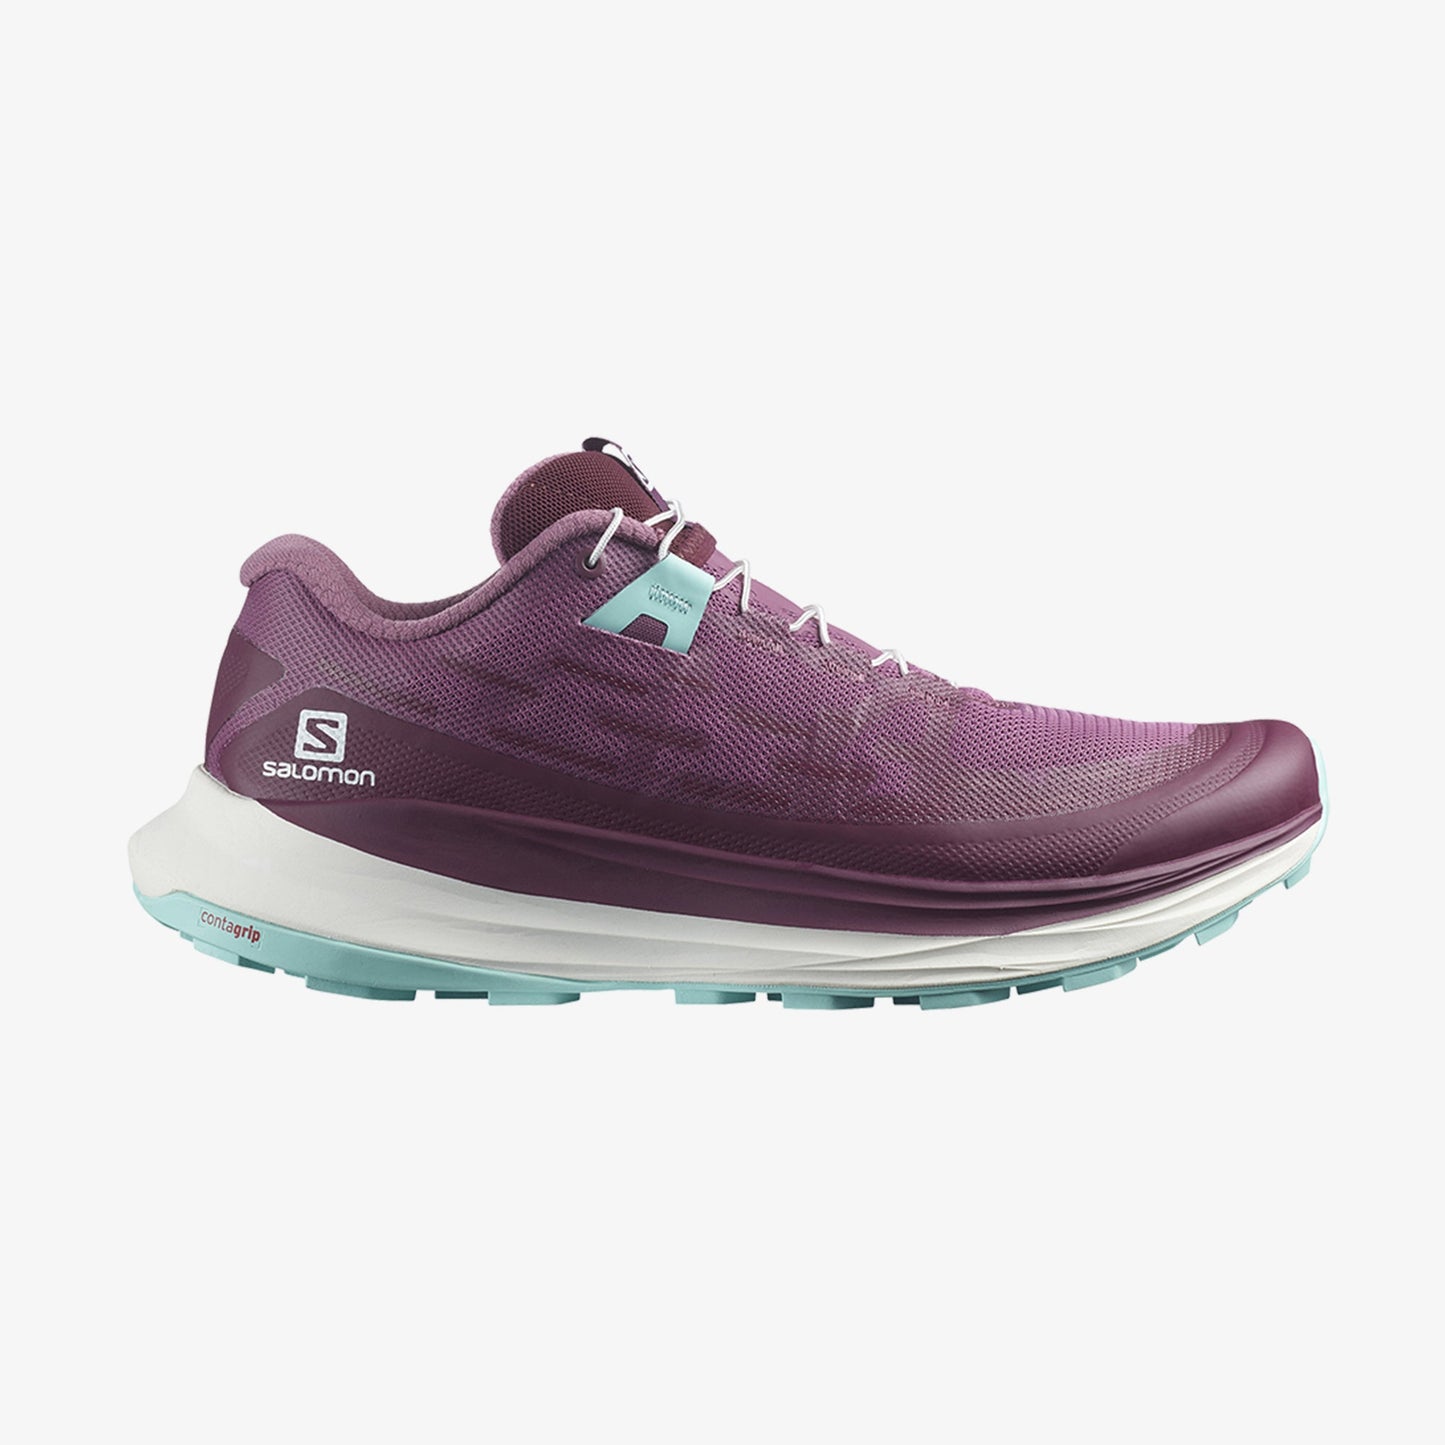 Salomon Women's Ultra Glide Trail Running Shoes,Grape/Red